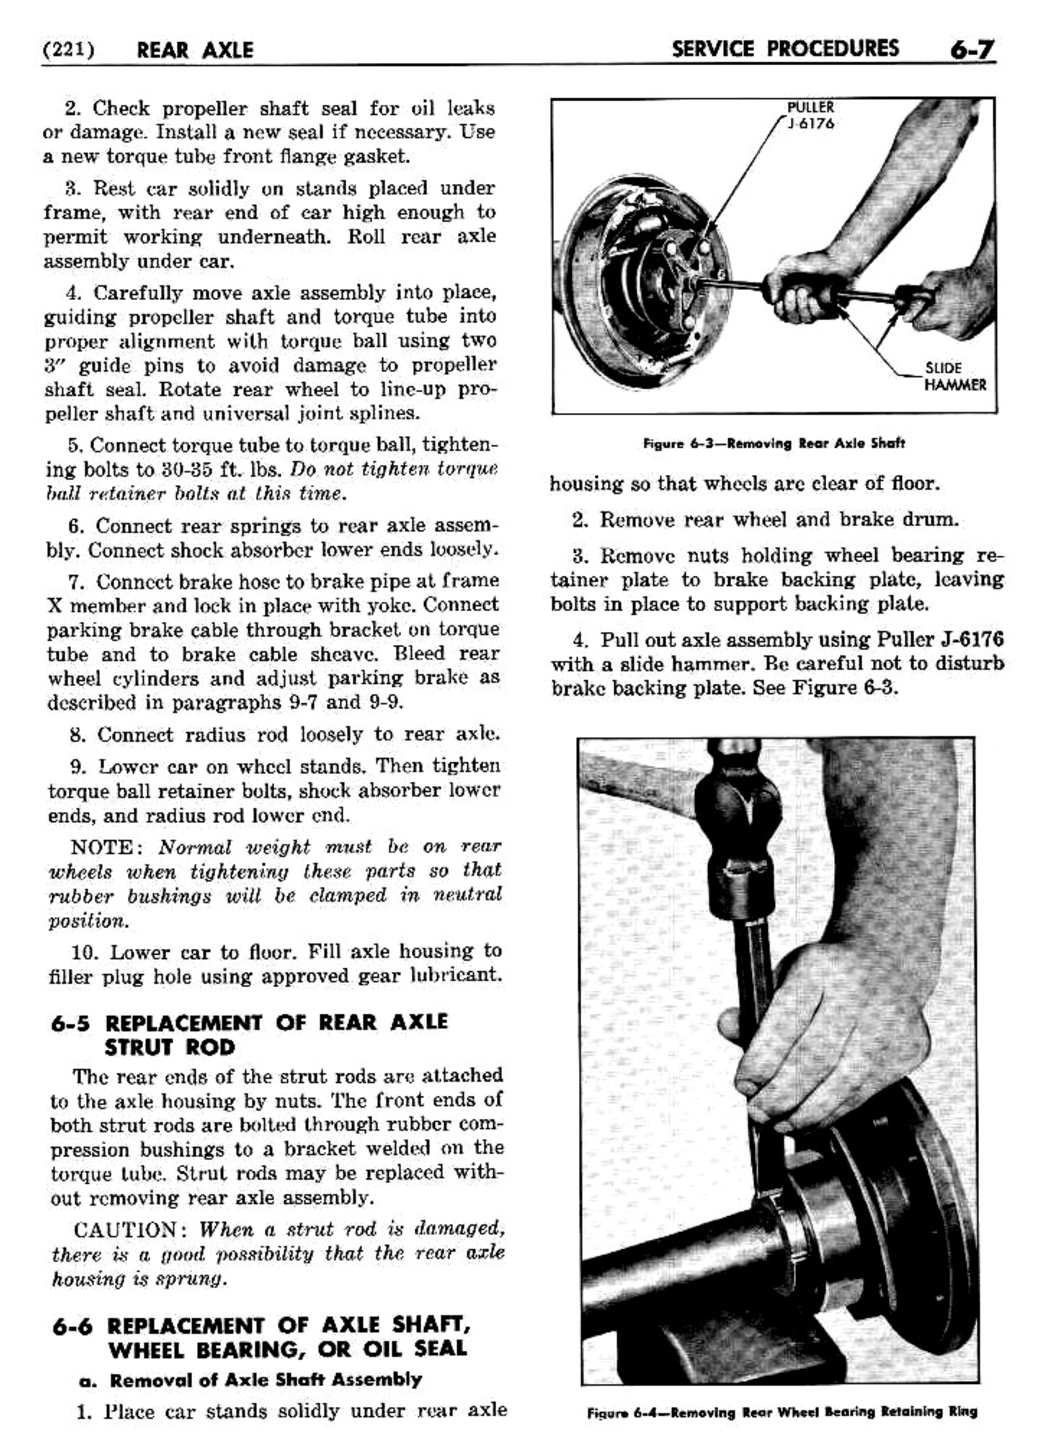 n_07 1956 Buick Shop Manual - Rear Axle-007-007.jpg